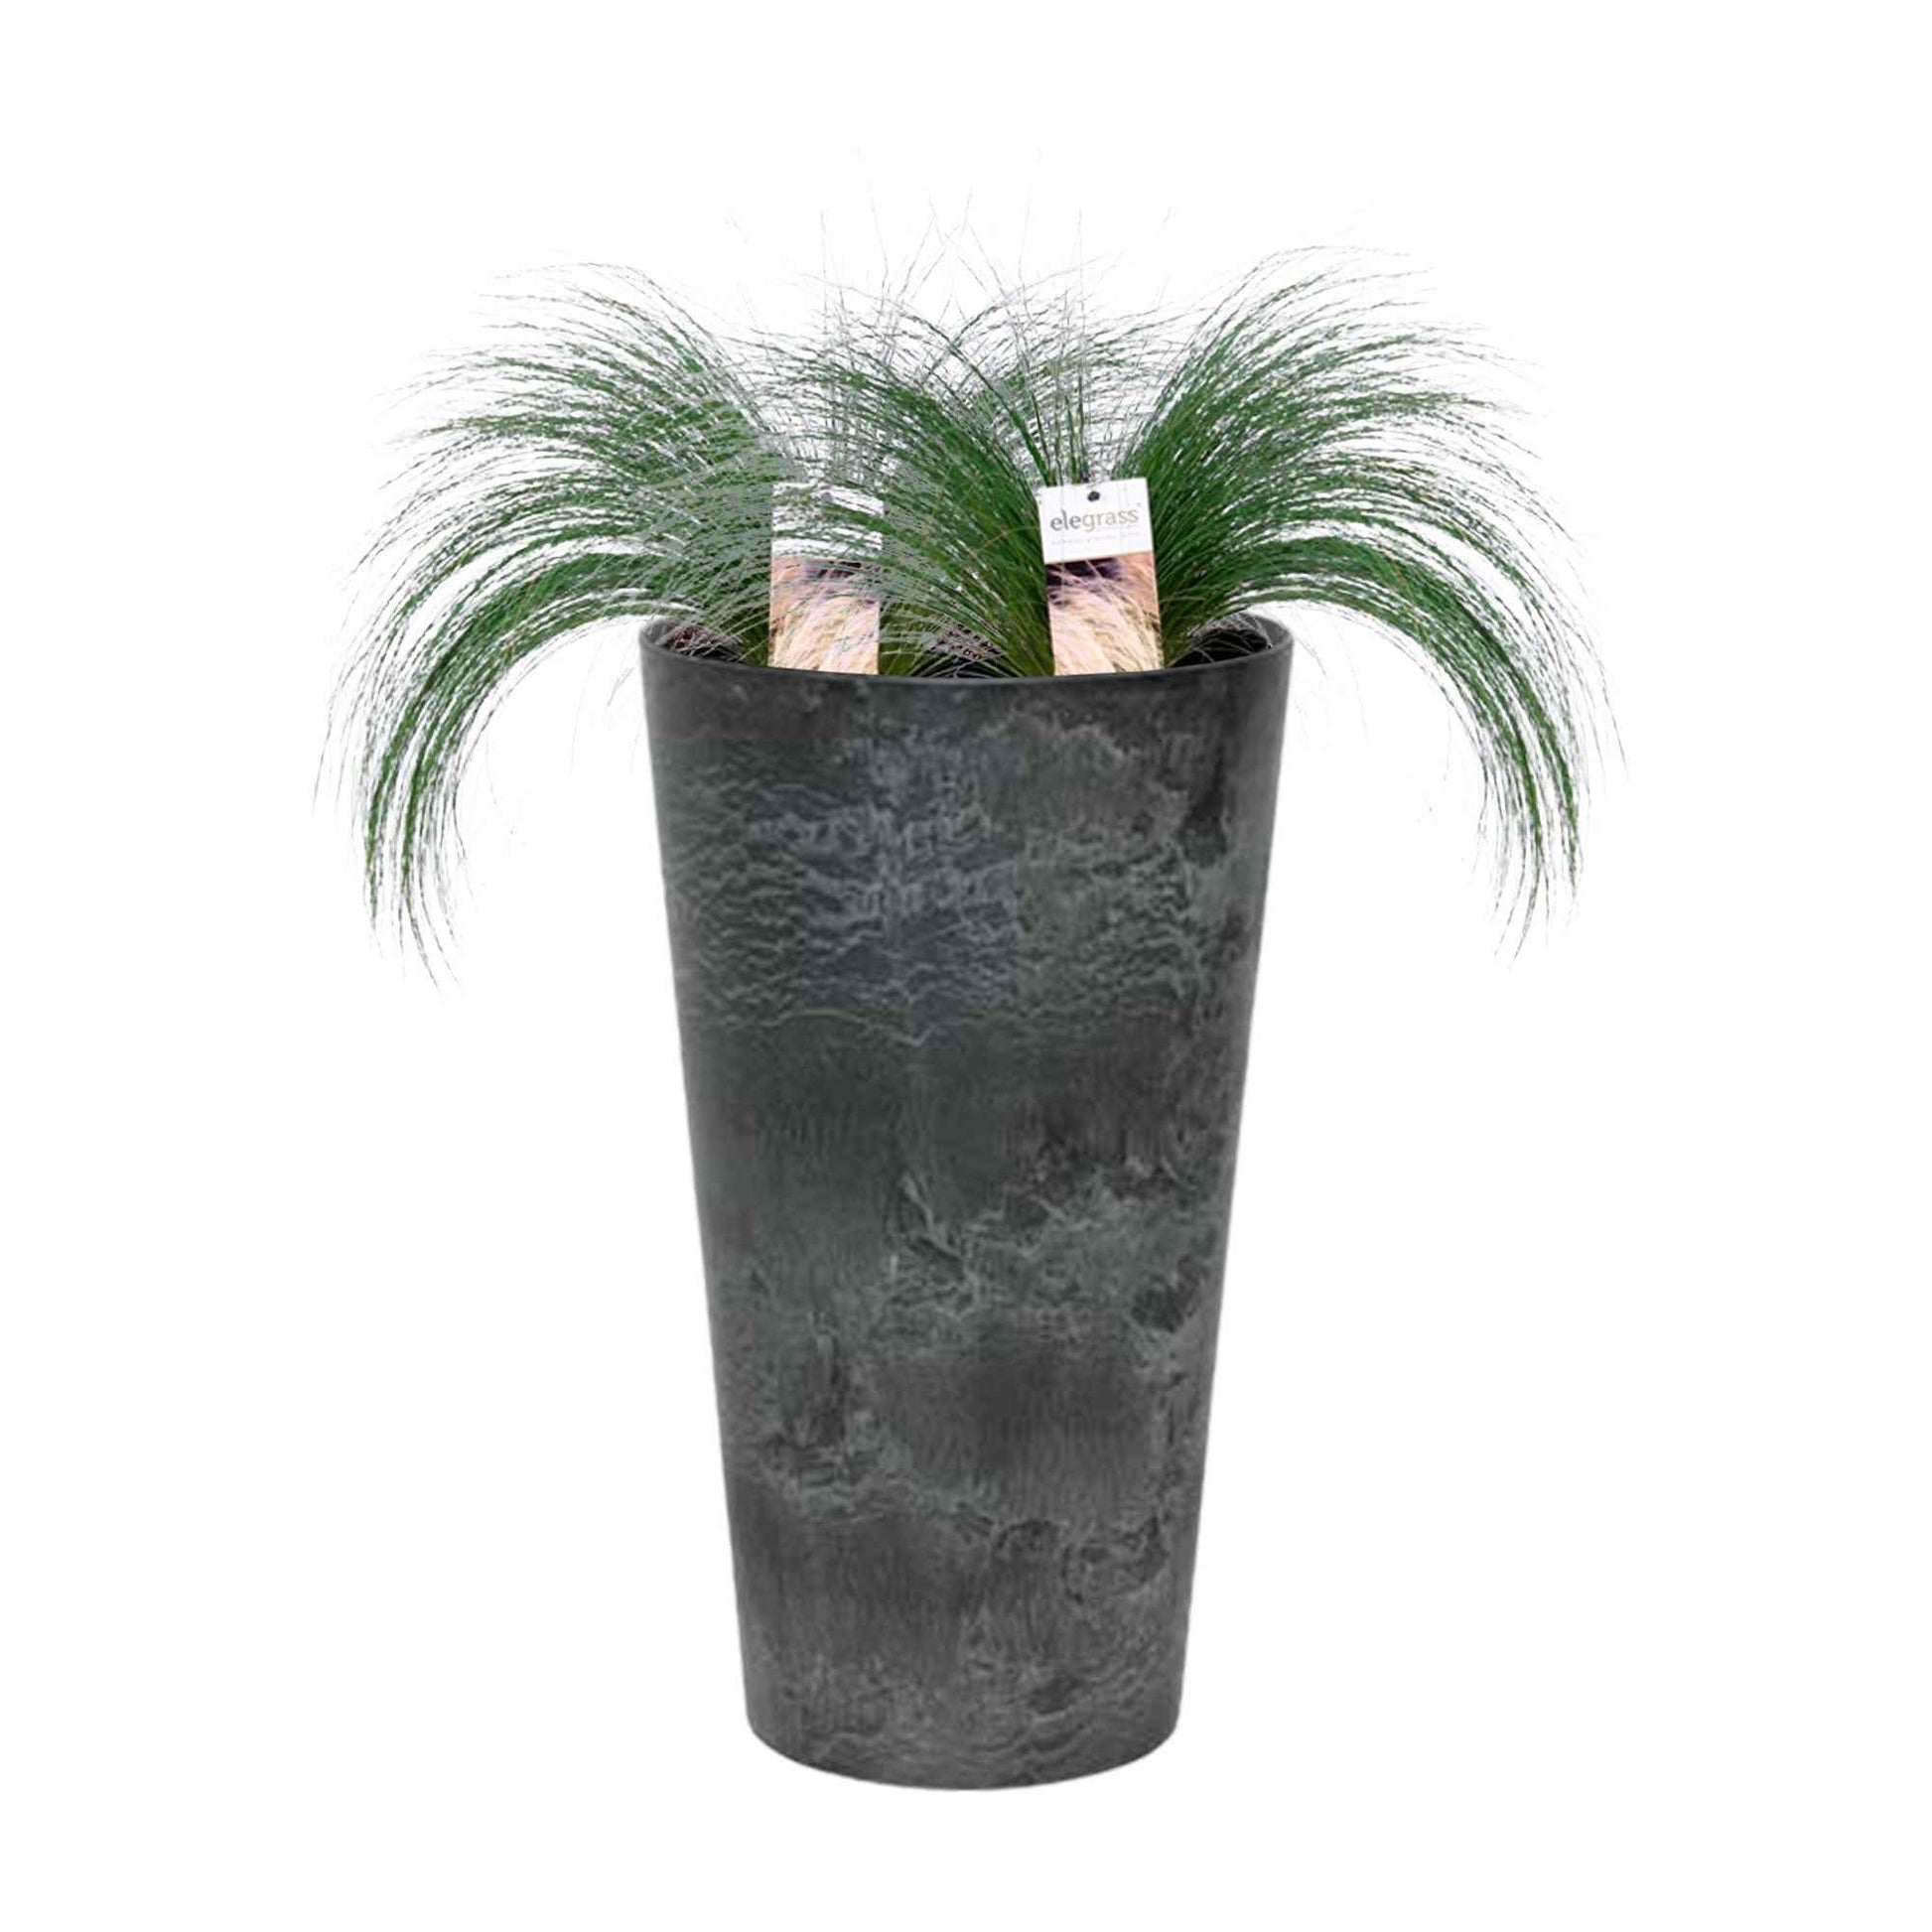 2x Vedergras Stipa 'Ponytails' groen incl. hoge bloempot zwart - Alle tuinplanten in pot